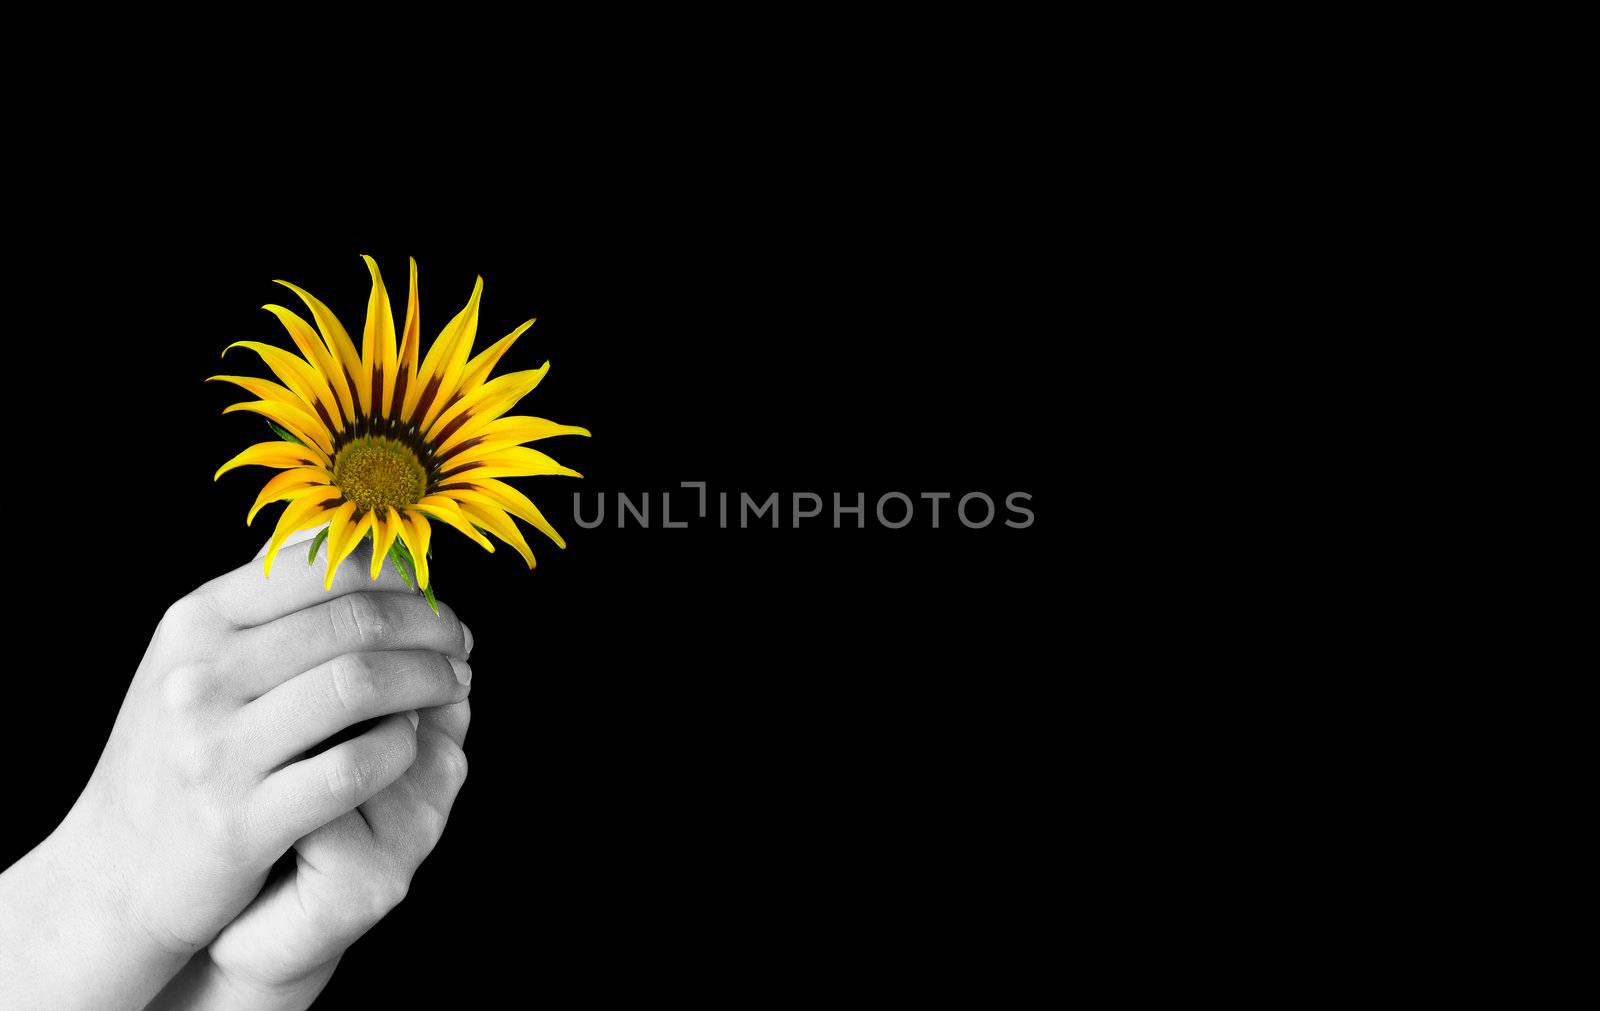 Hands giving a yellow flower